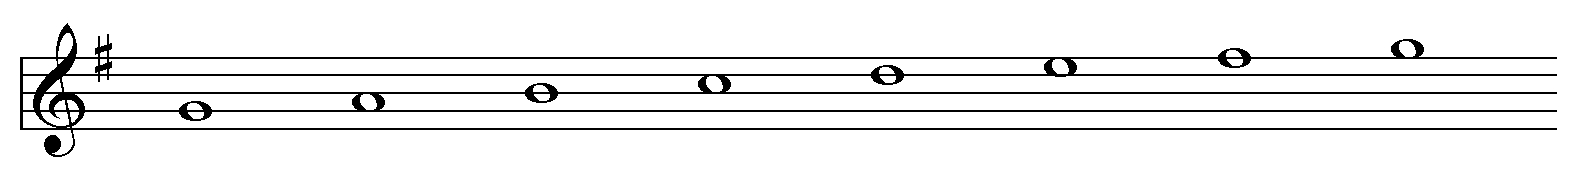 G调音阶谱例.JPG